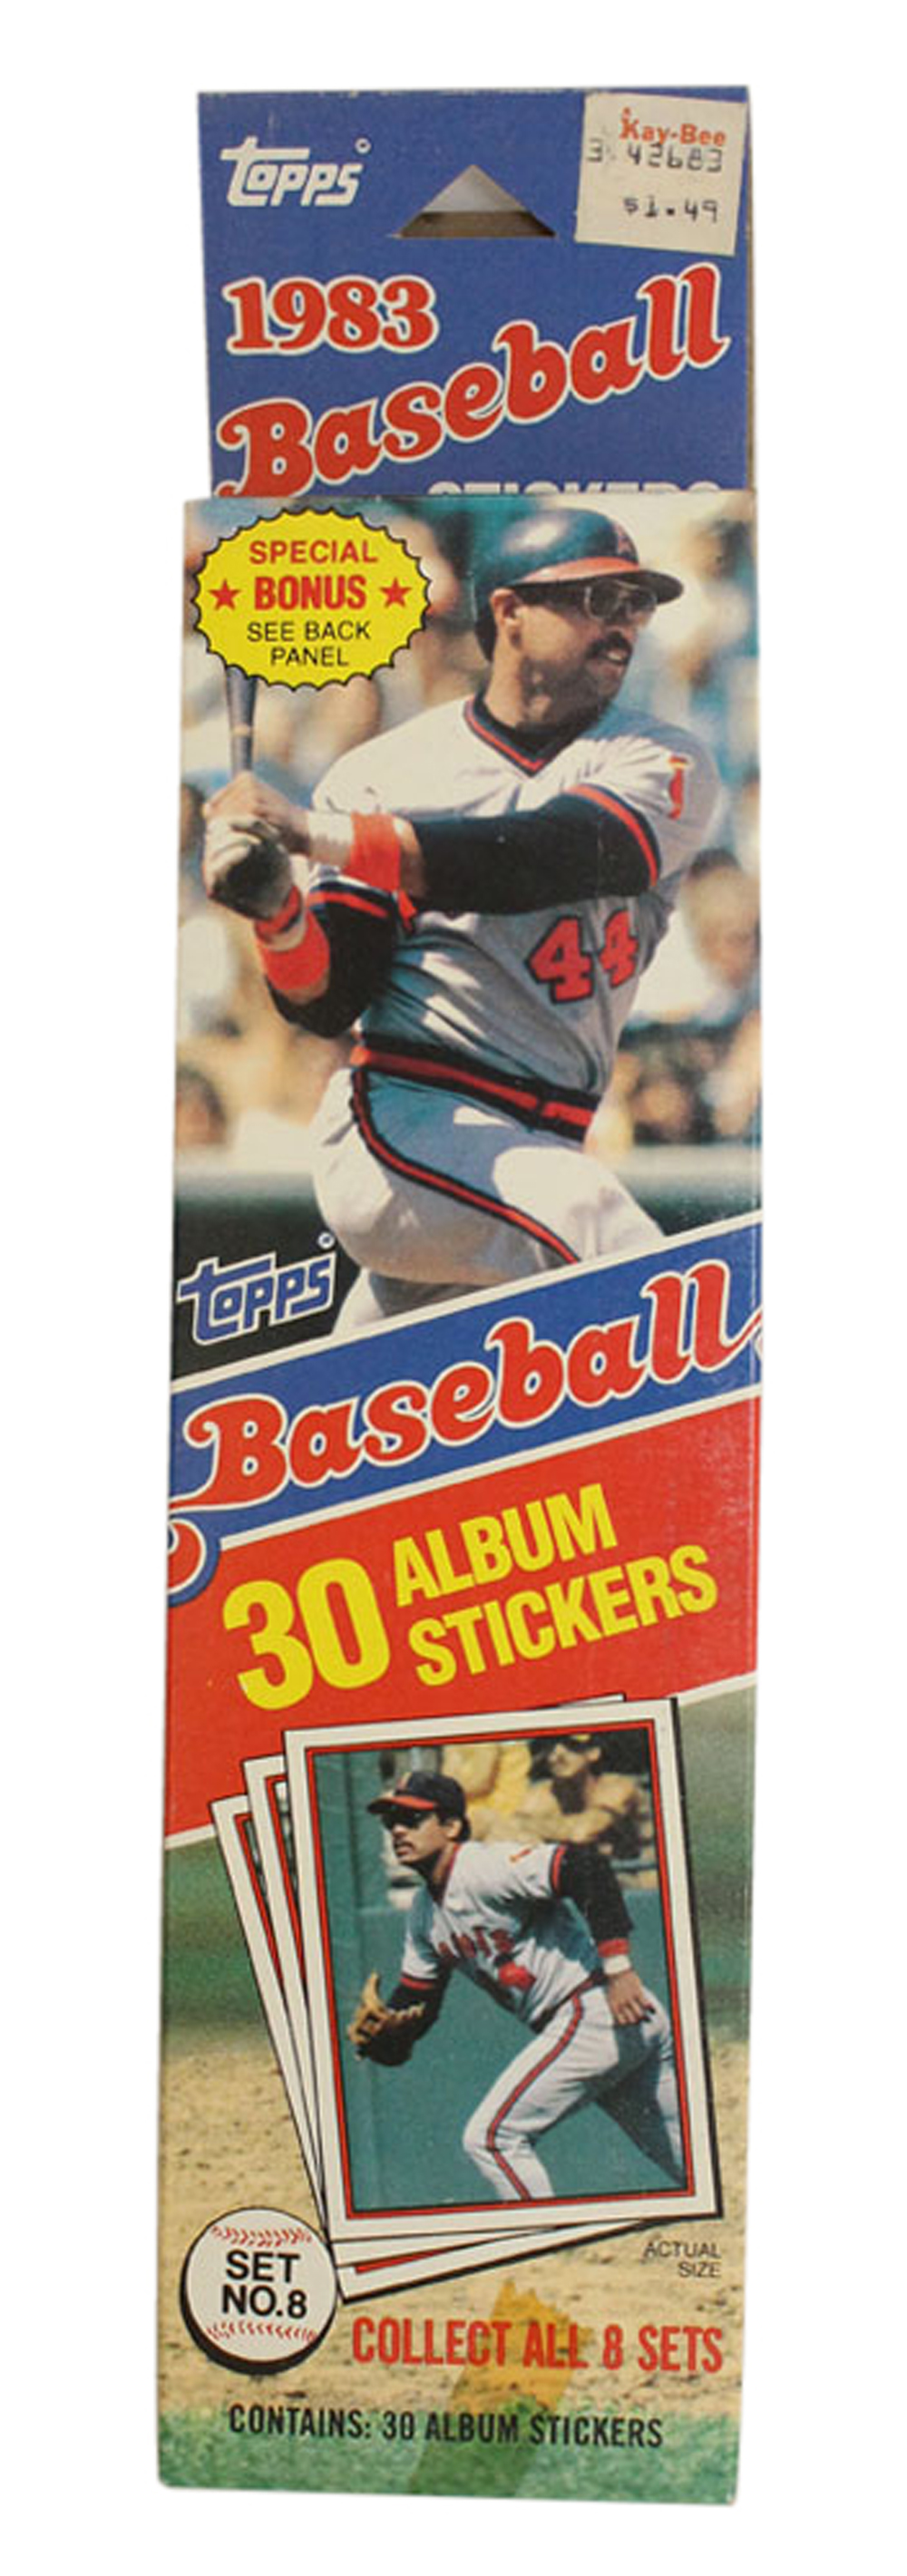 1983 MLB Album Stickers Set #8 30 Stickers